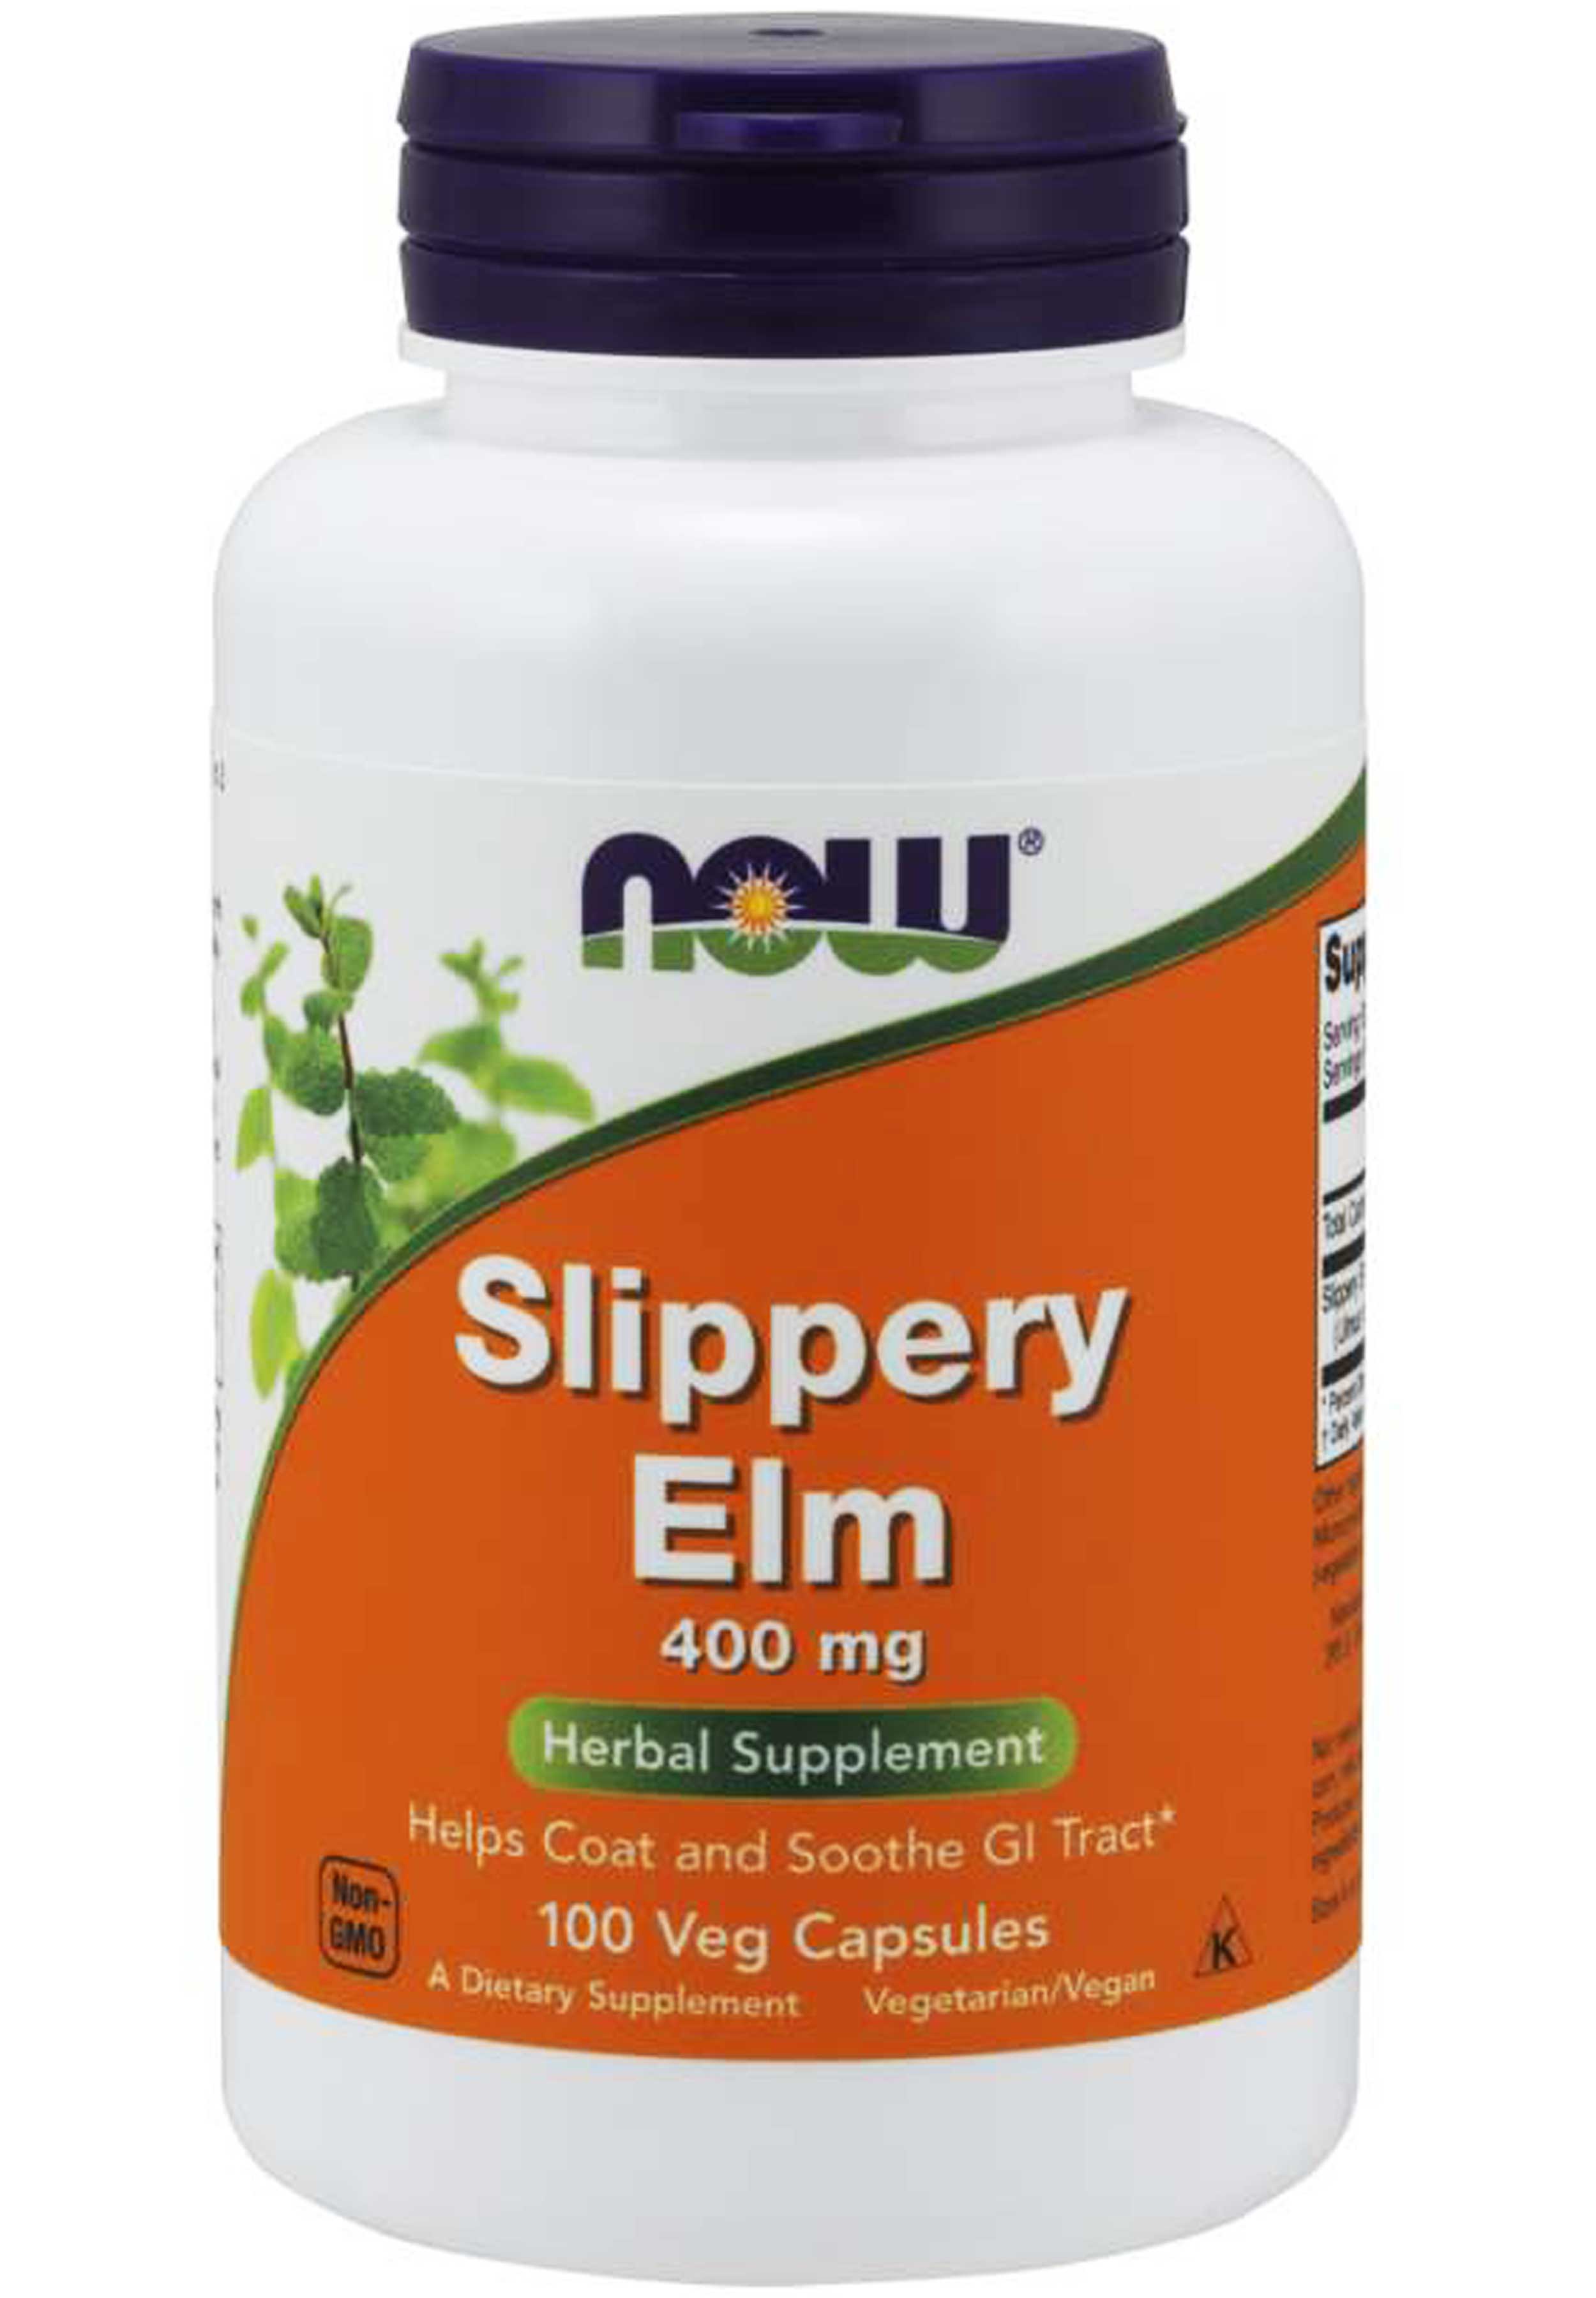 NOW Slippery Elm 400 mg